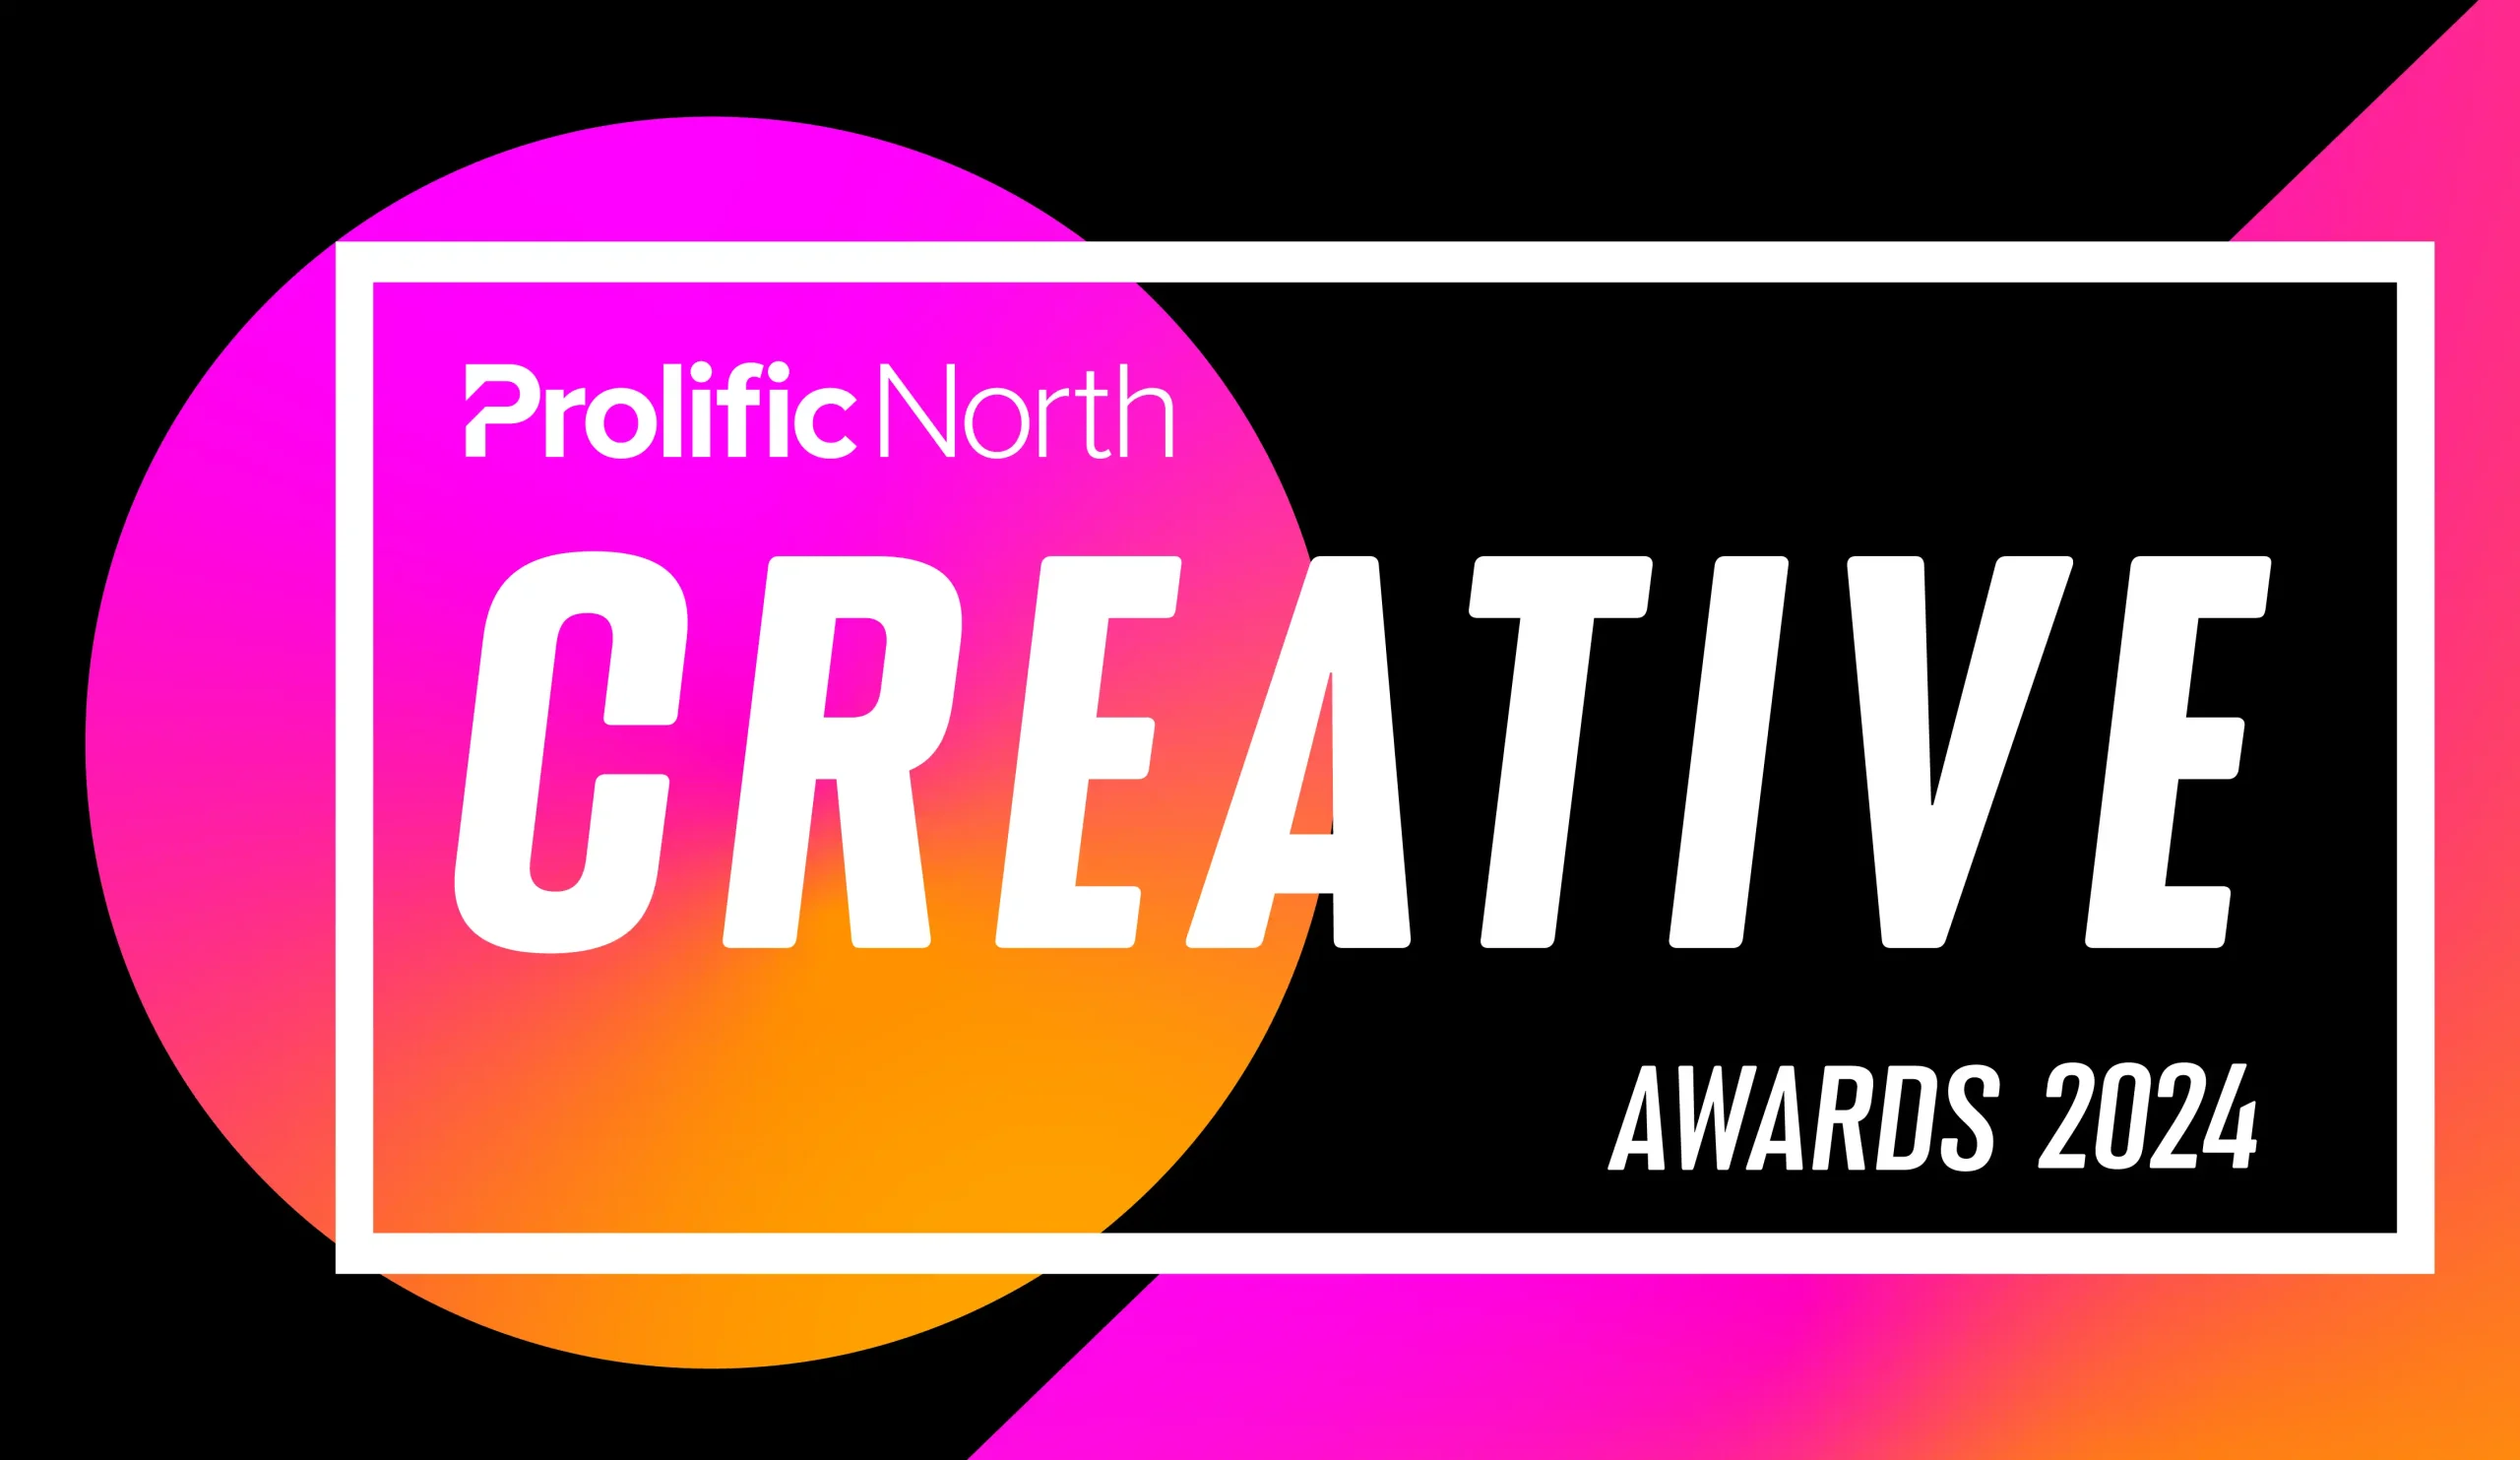 PNCRA24 Prolific North finalist creative for good